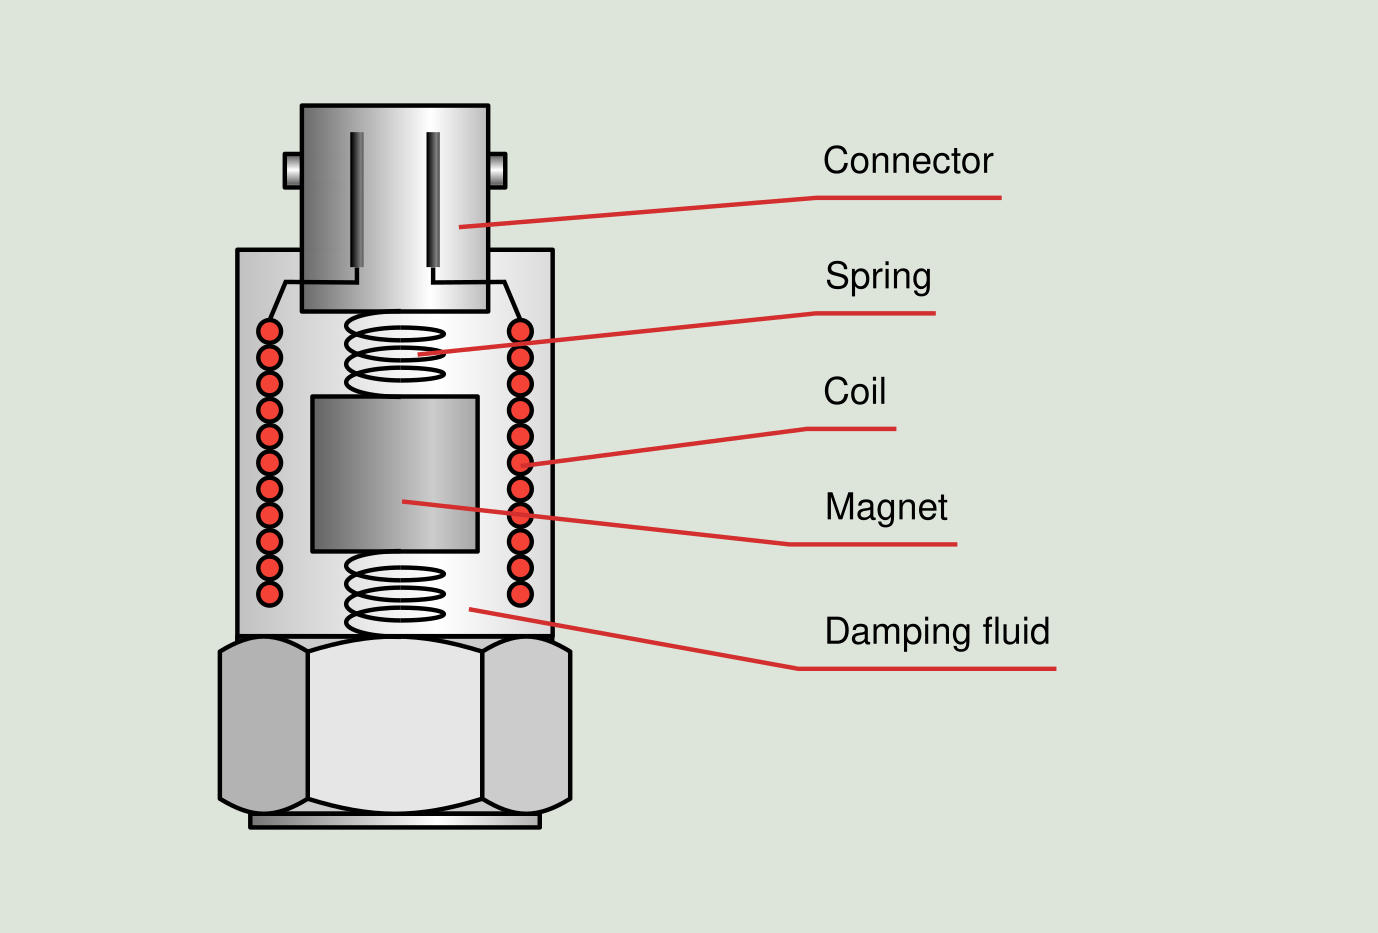 Figure 3.5: Seismic transducer components